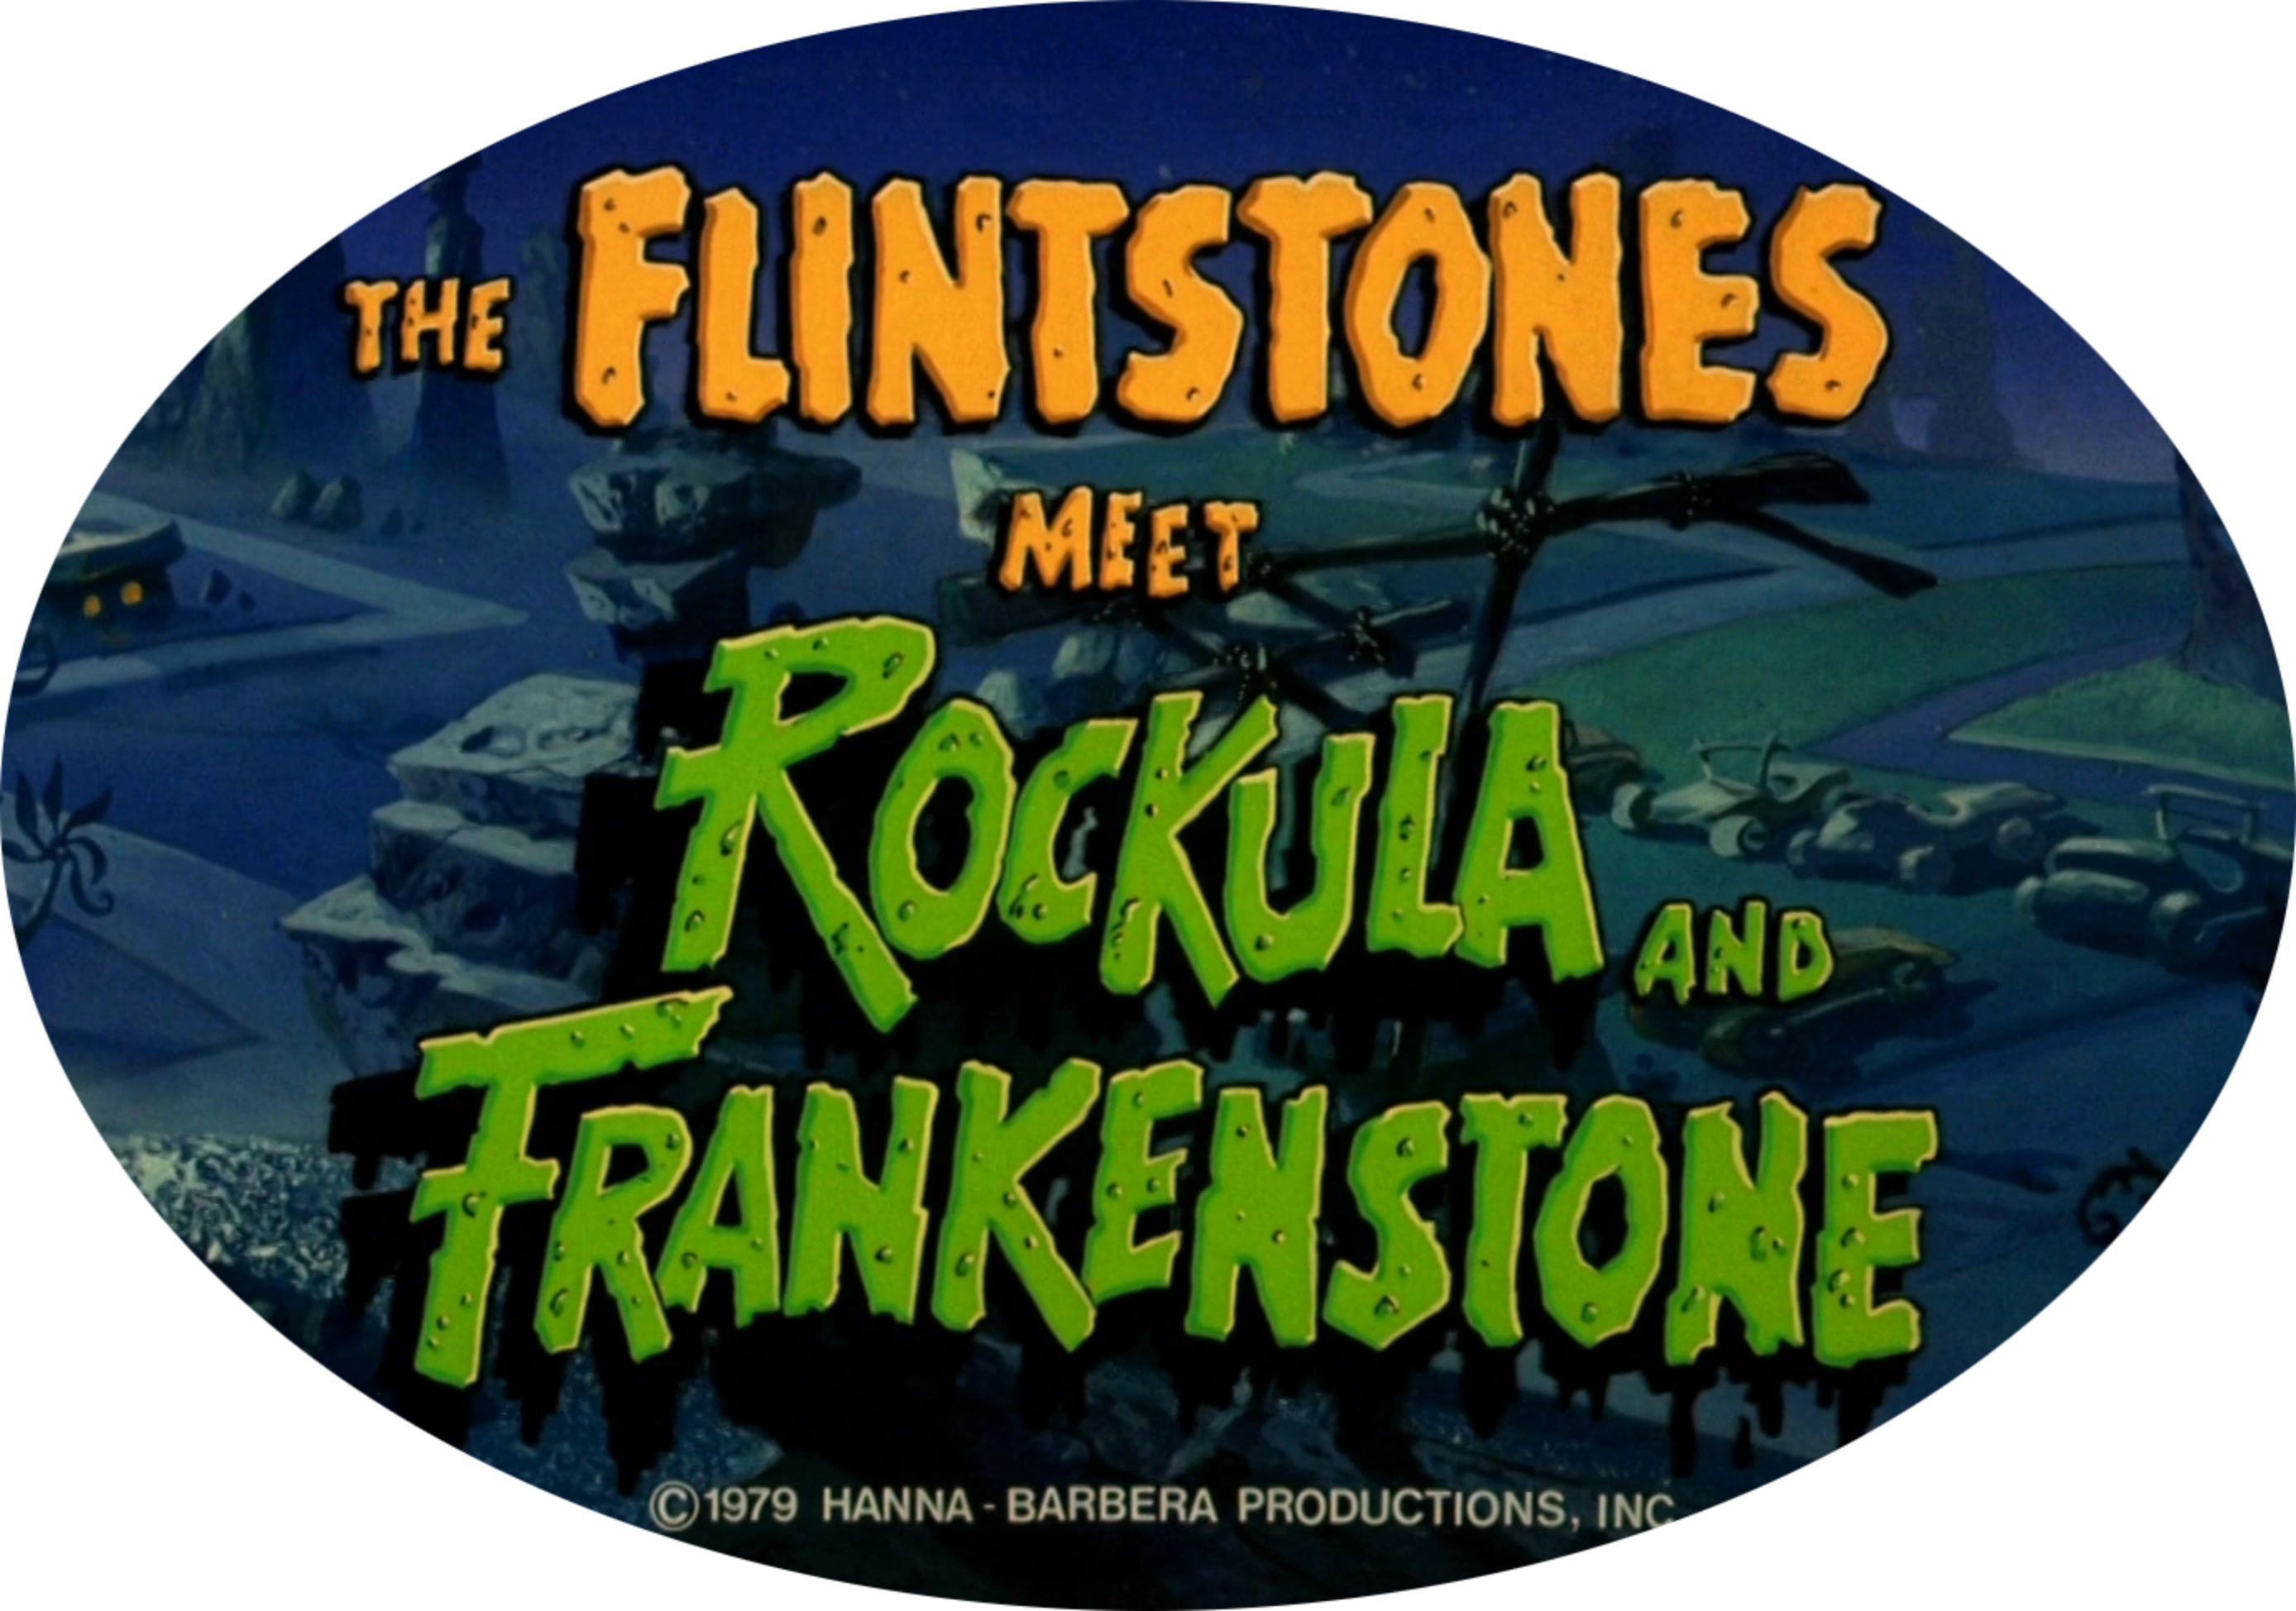 The Flintstones Meet Rockula and Frankenstone 